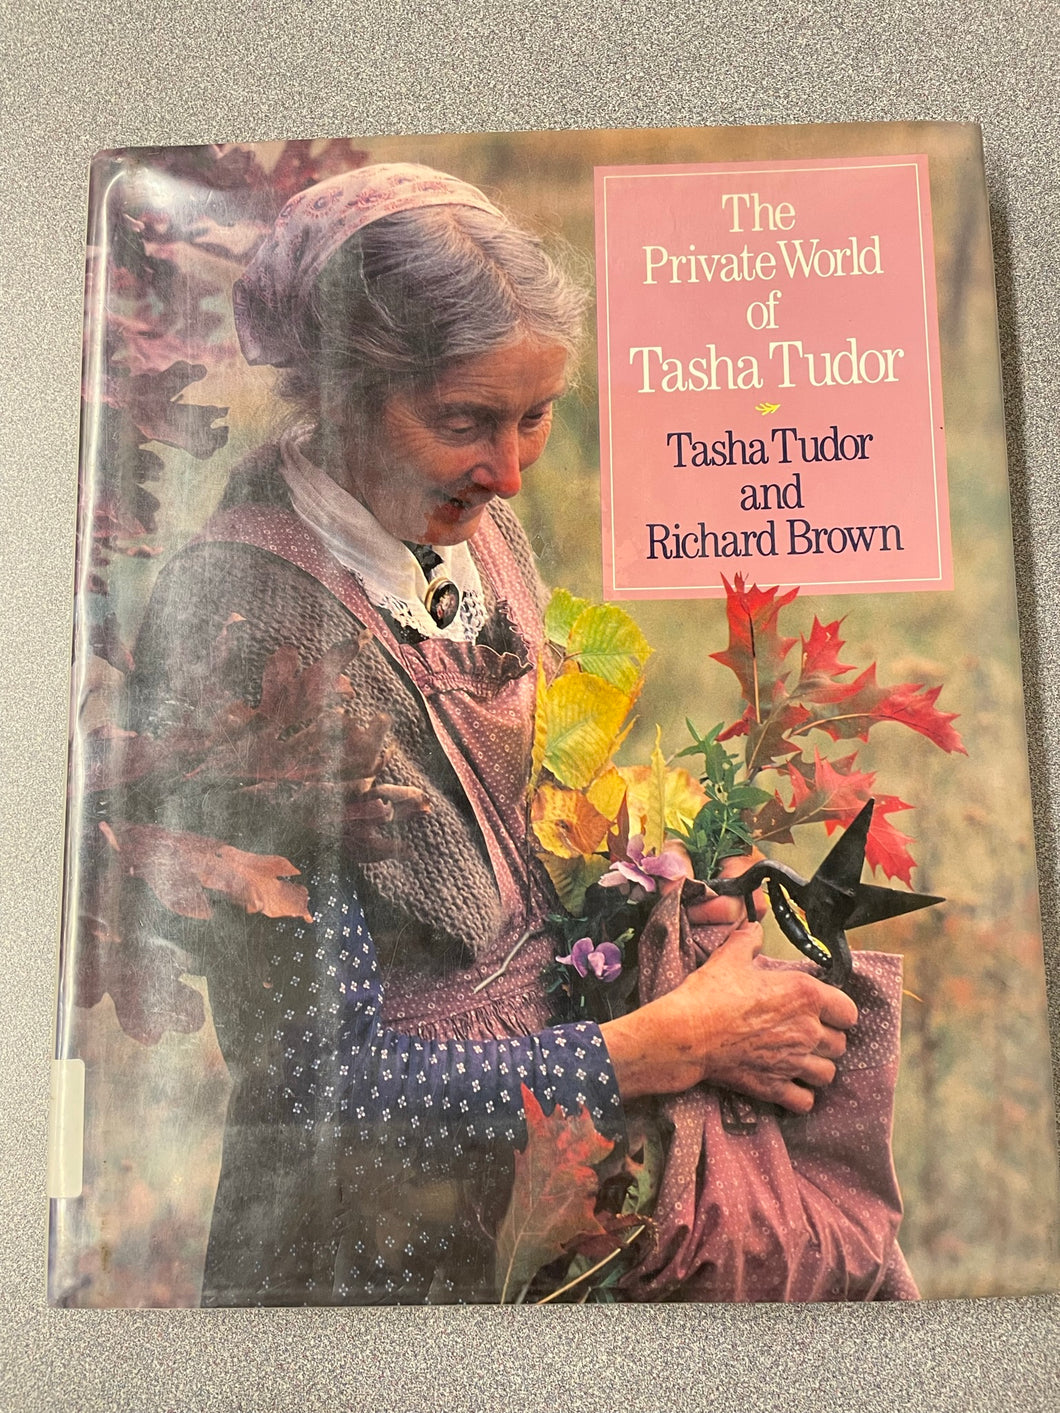 The Private World of Tasha Tudor, Tudor, Tasha and Richard Brown, [1992] BI 1/23